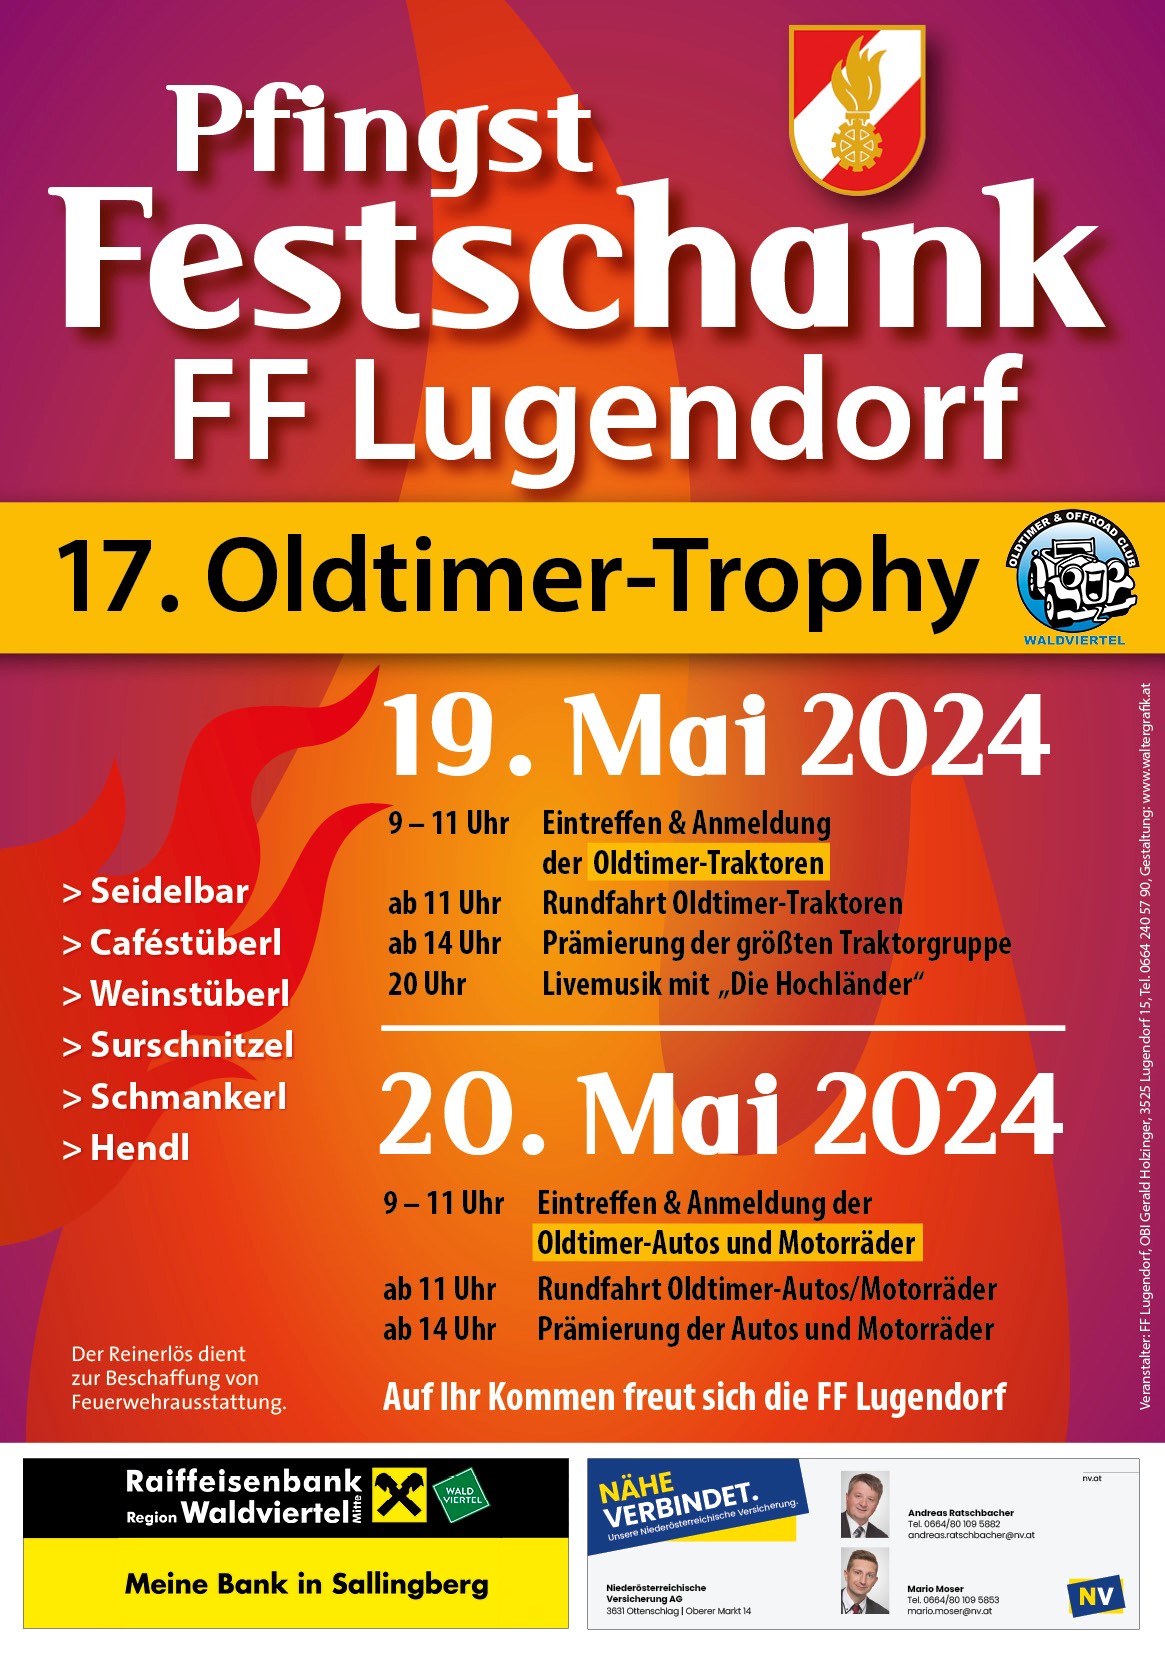 Pfingsst Festschank - FF Lugendorf